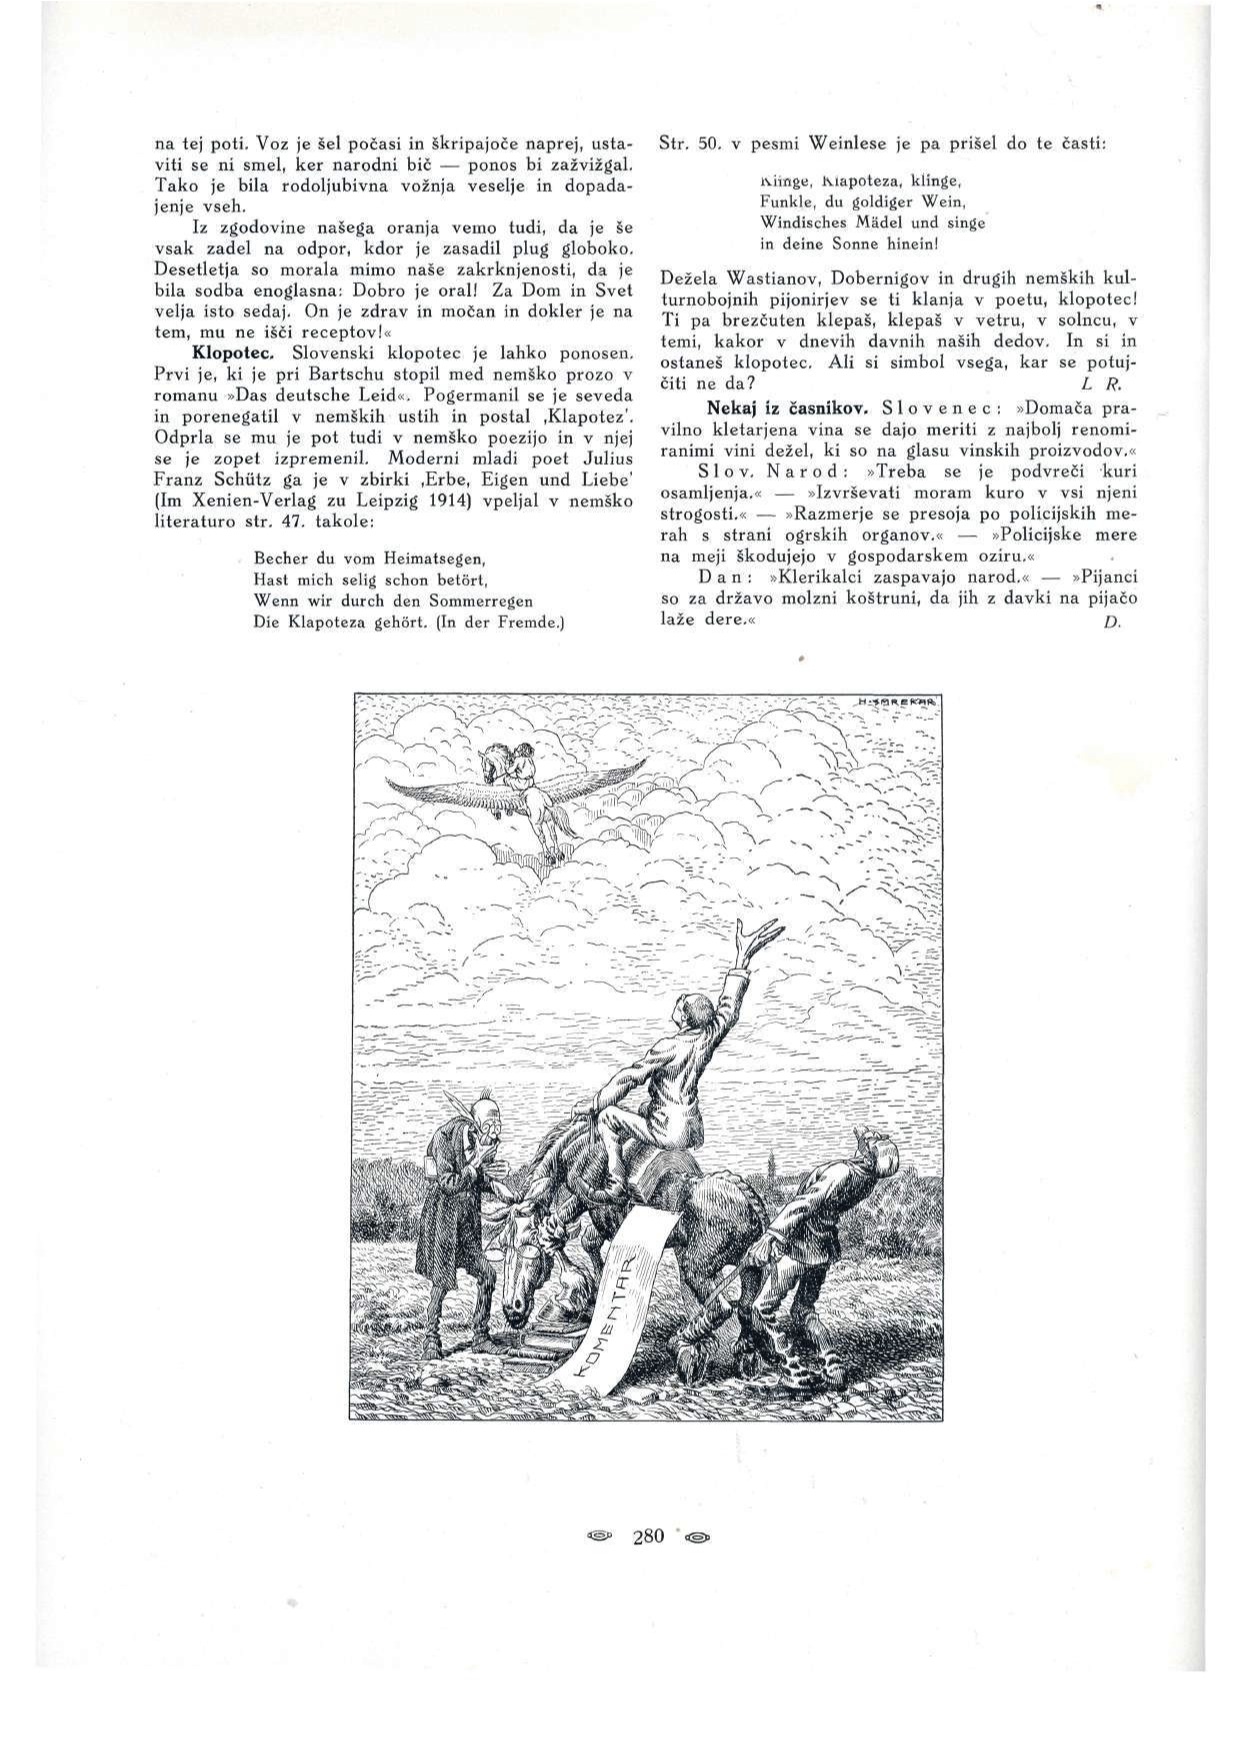 Hinko Smrekar’s caricature Dom in svet published by Catholic Printers Society 1912.jpg